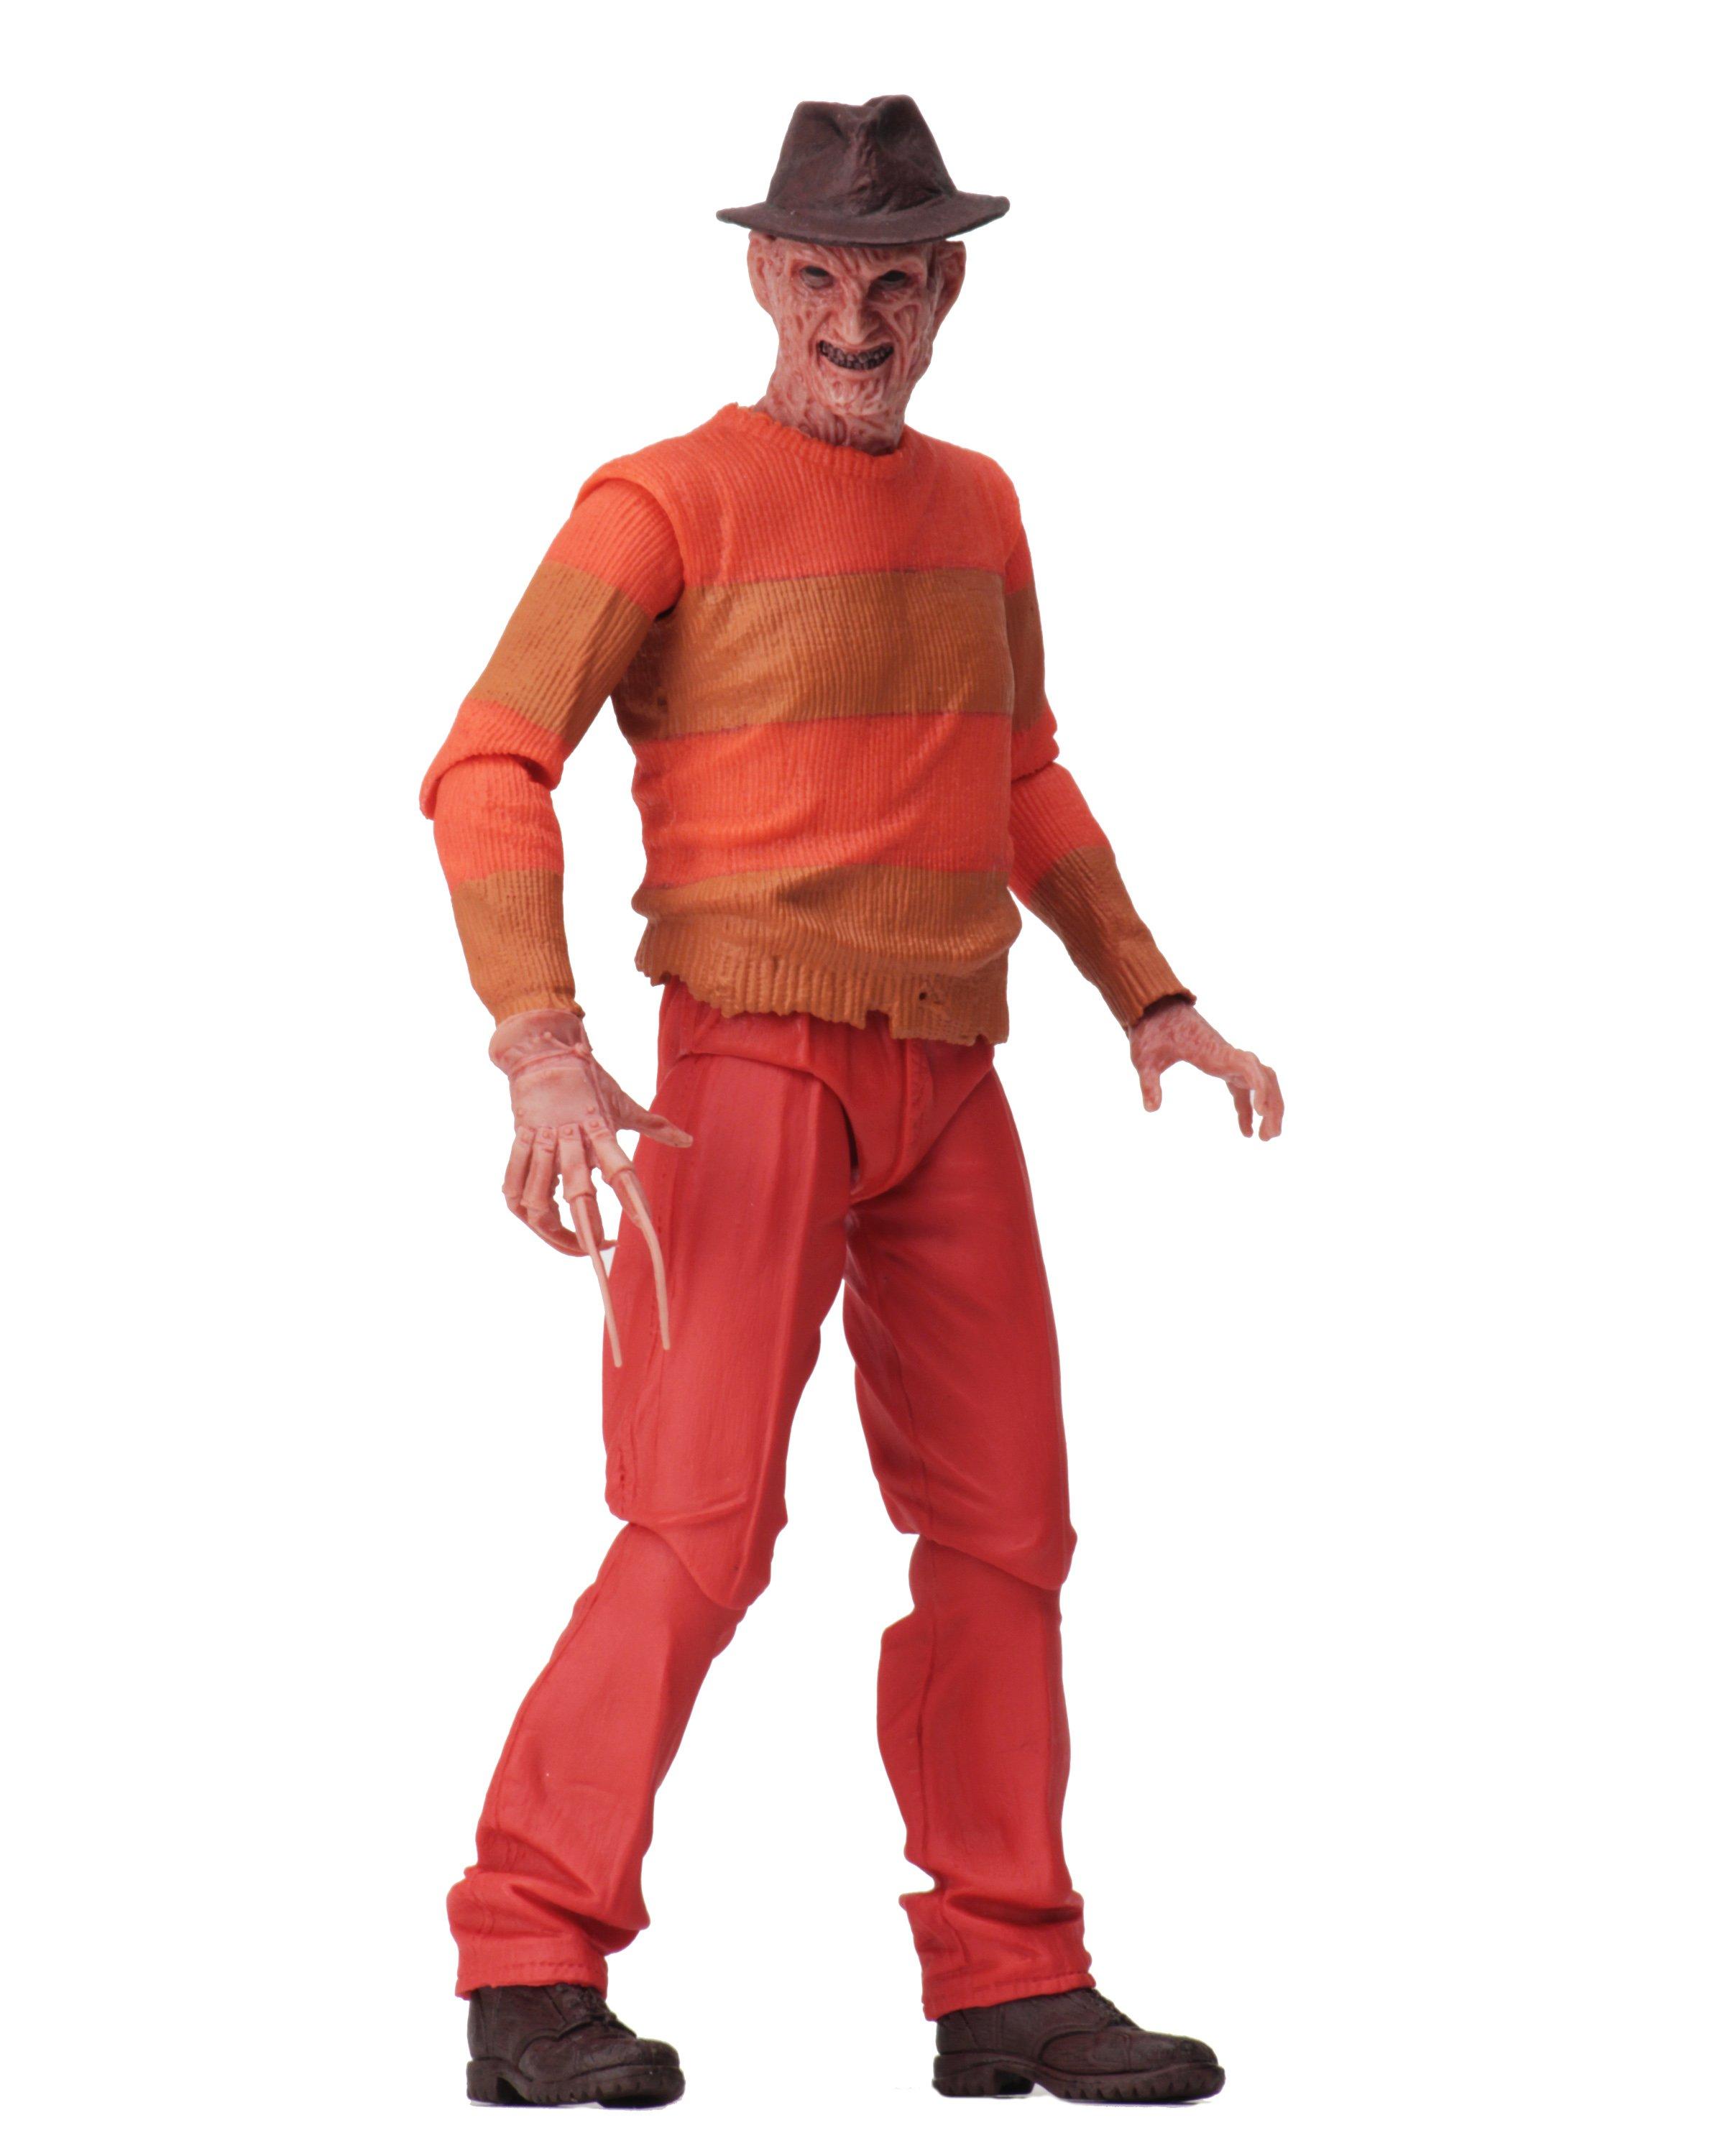 A Nightmare On Elm Street 19 Freddy Krueger Action Figure Only At Gamestop Gamestop